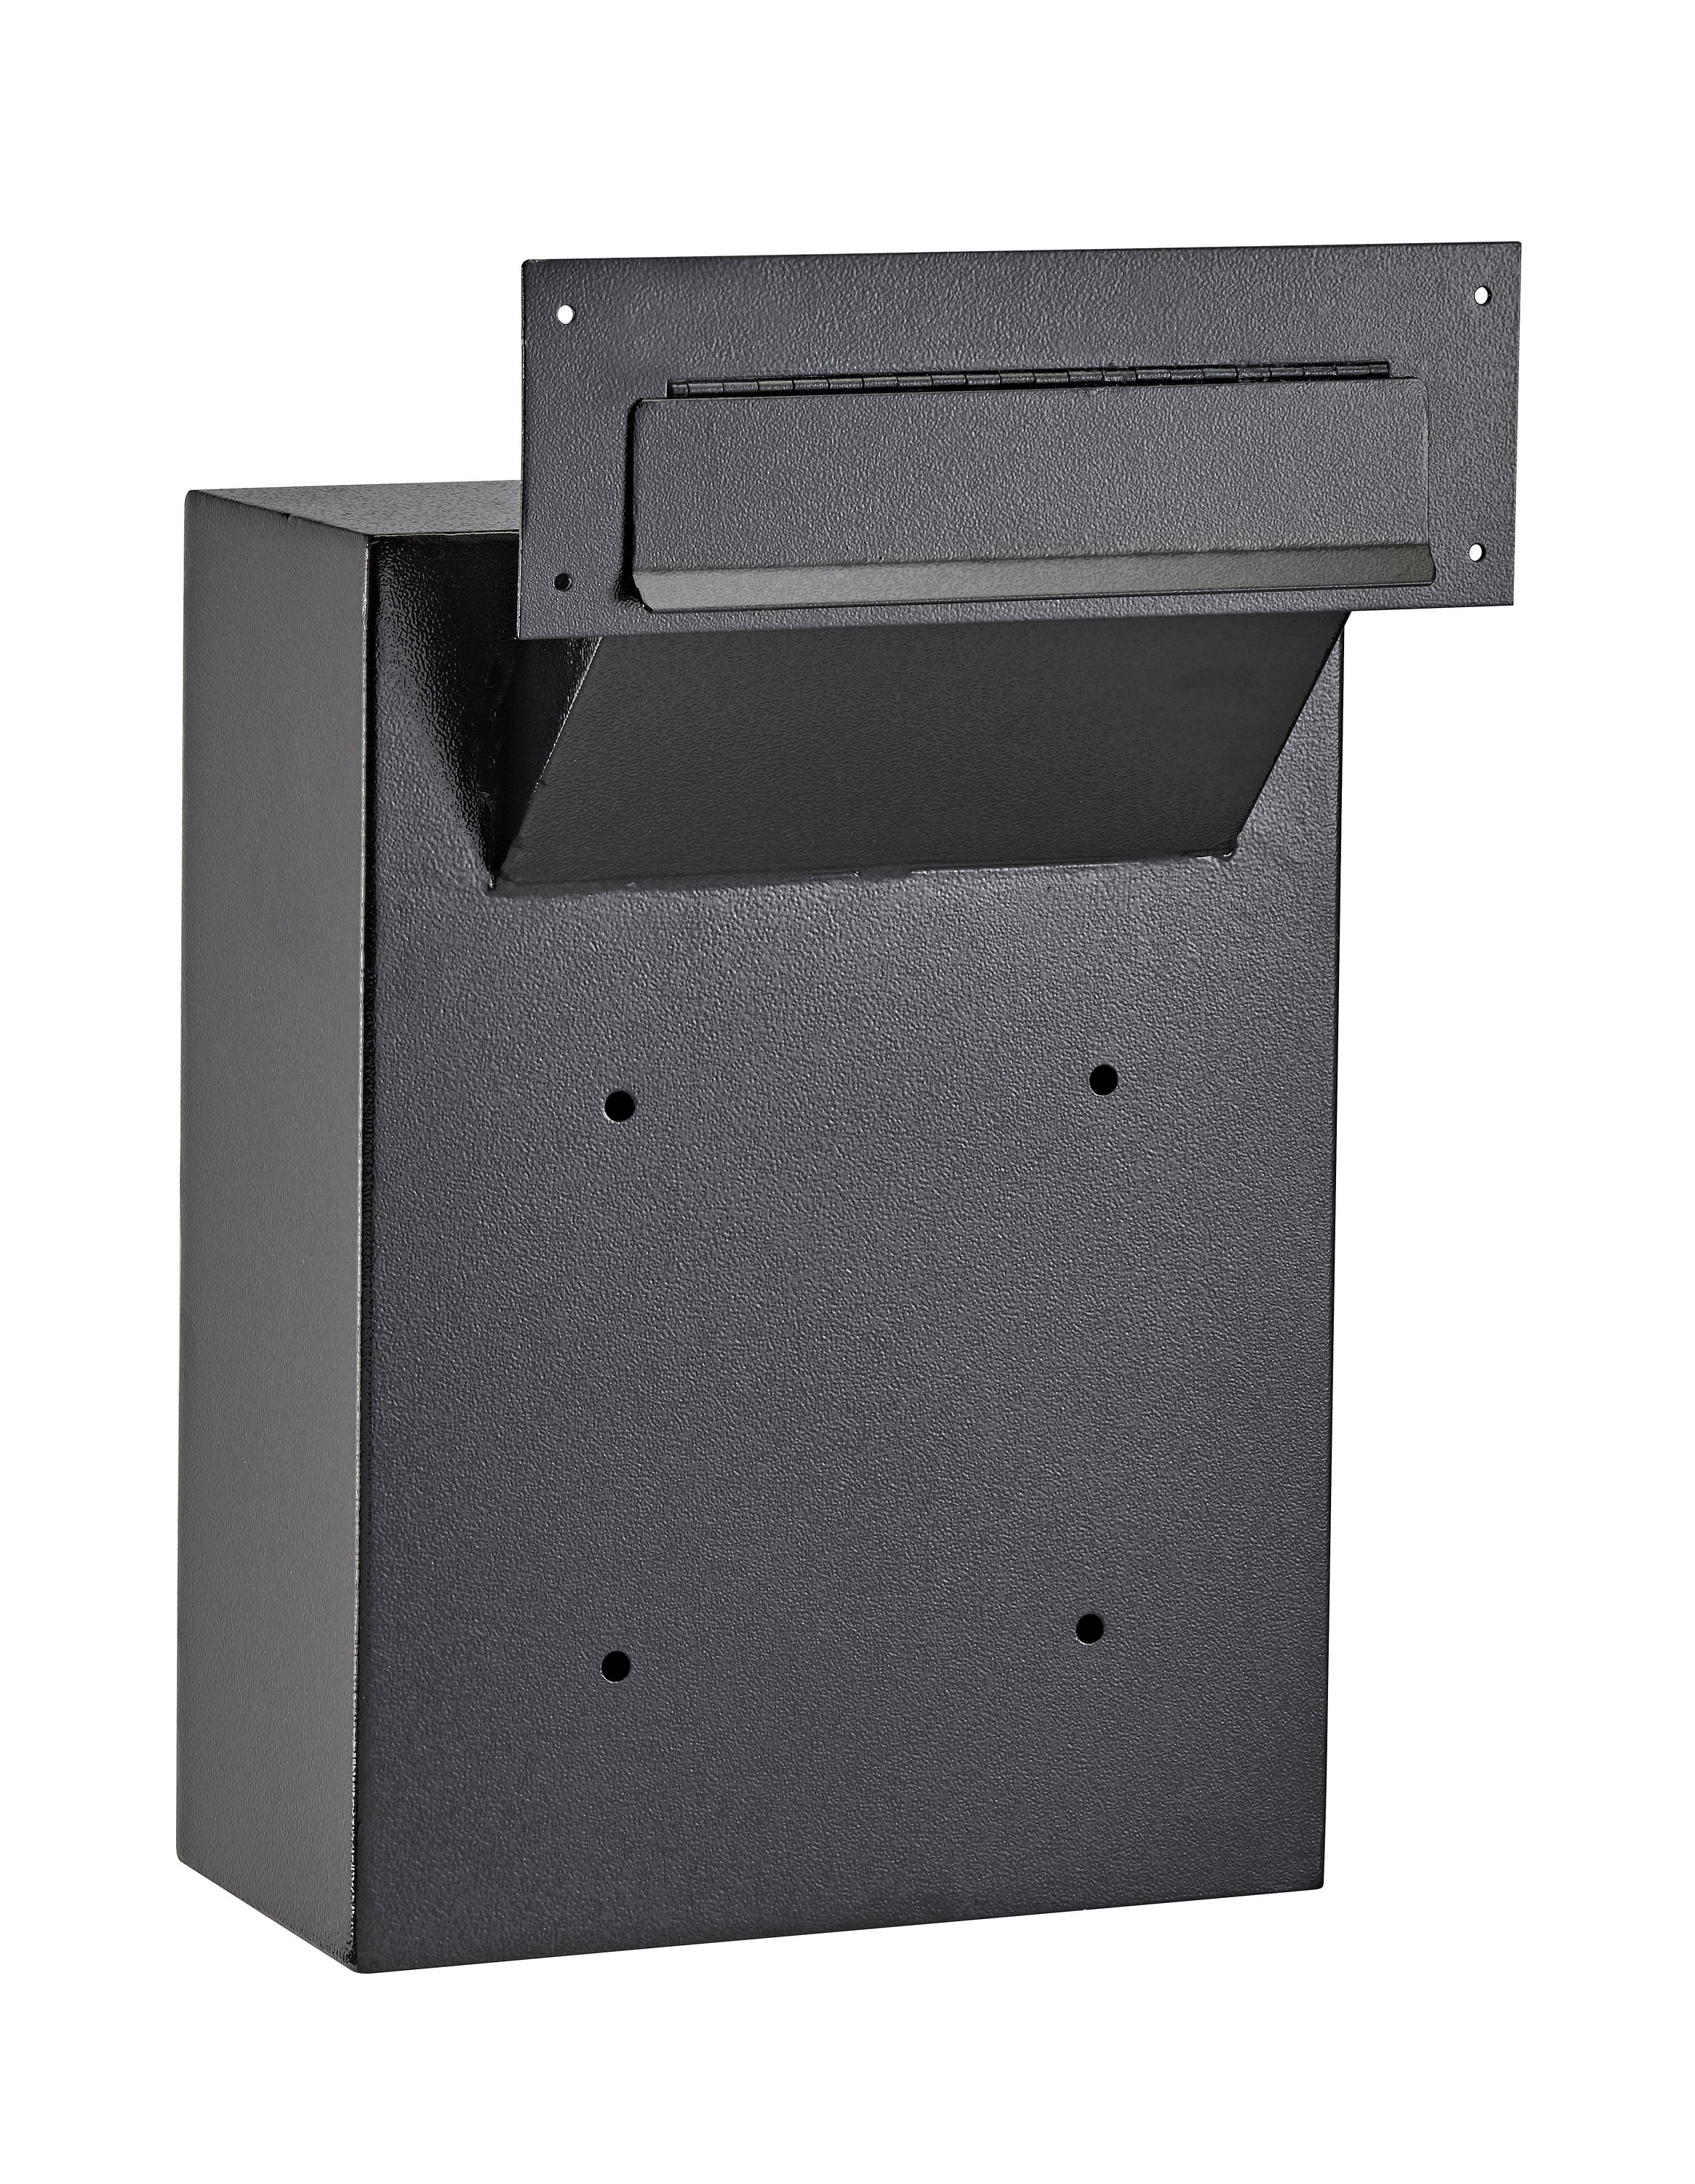 DuraBox D700 Through The Wall Drop Box w/Adjustable Chute Deposit Safe Mail Box Black 